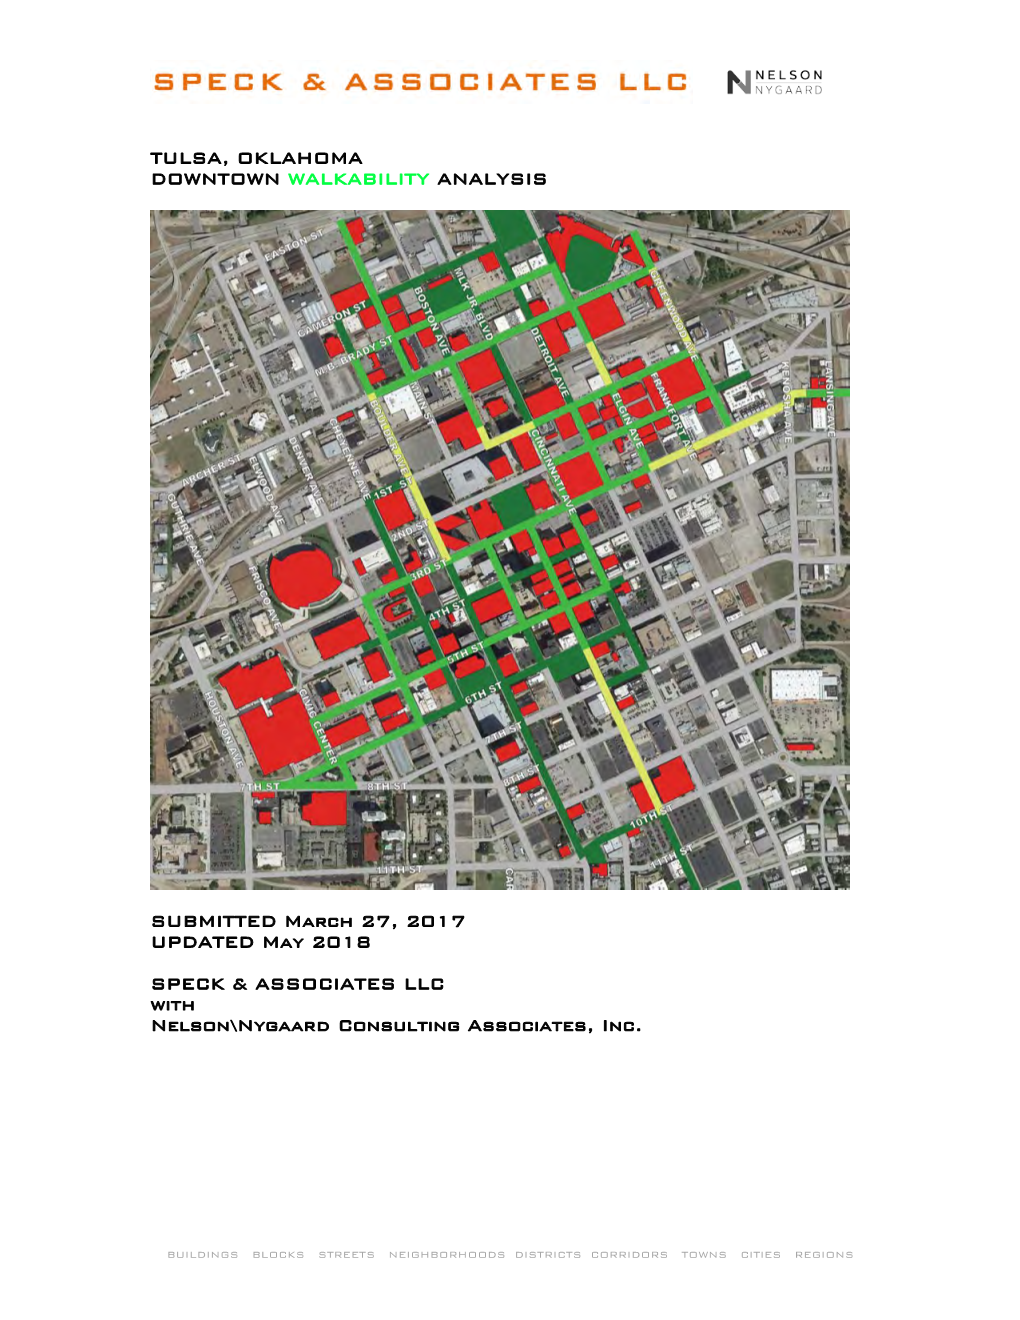 Downtown Tulsa Walkability Analysis Report